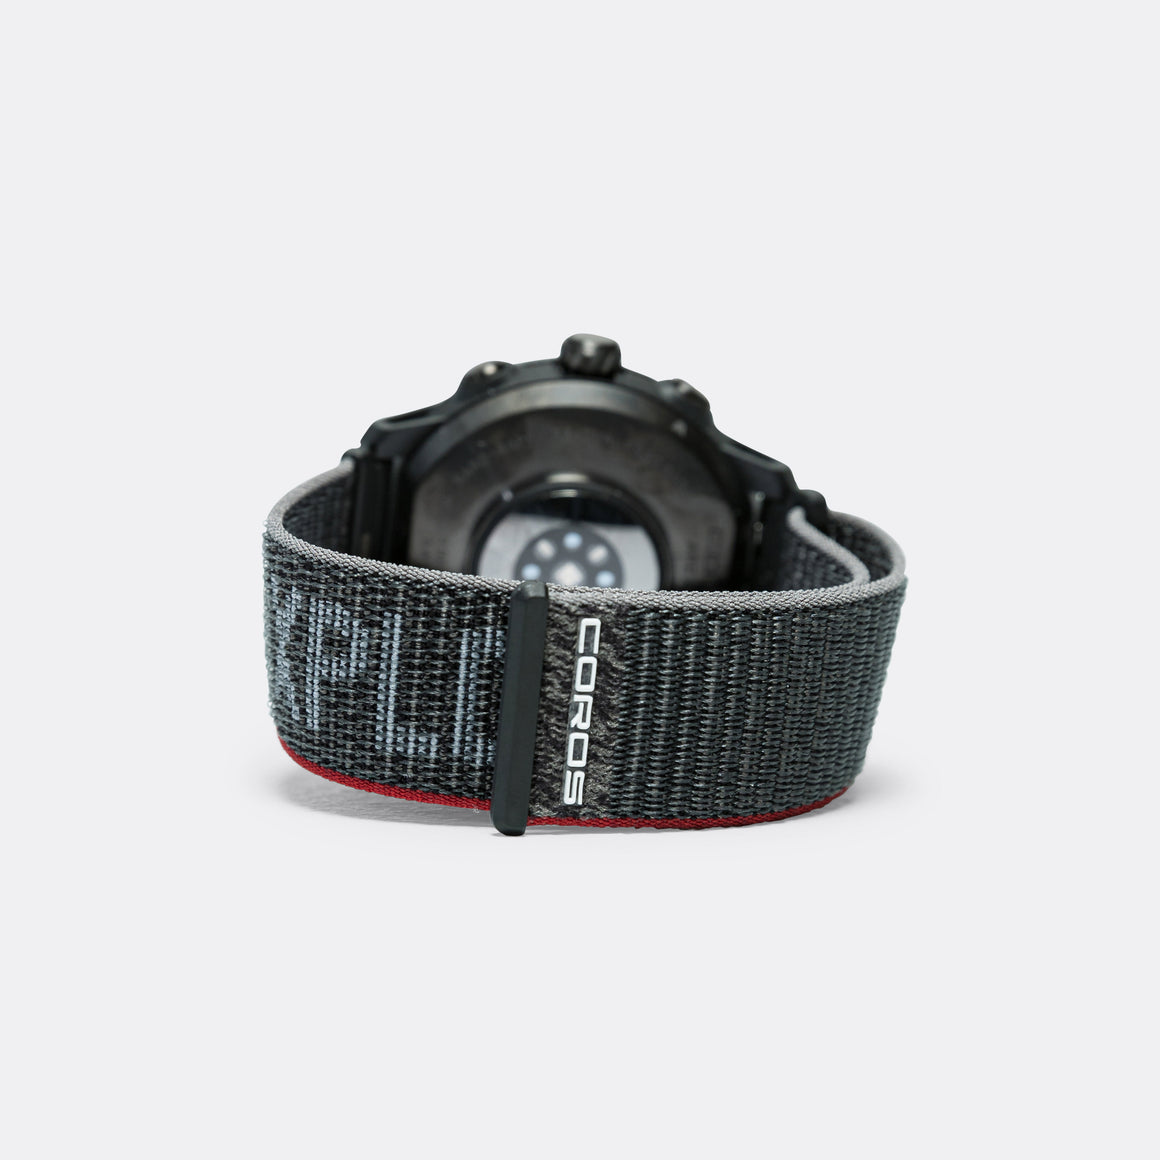 APEX 2 Pro GPS Outdoor Watch - Black